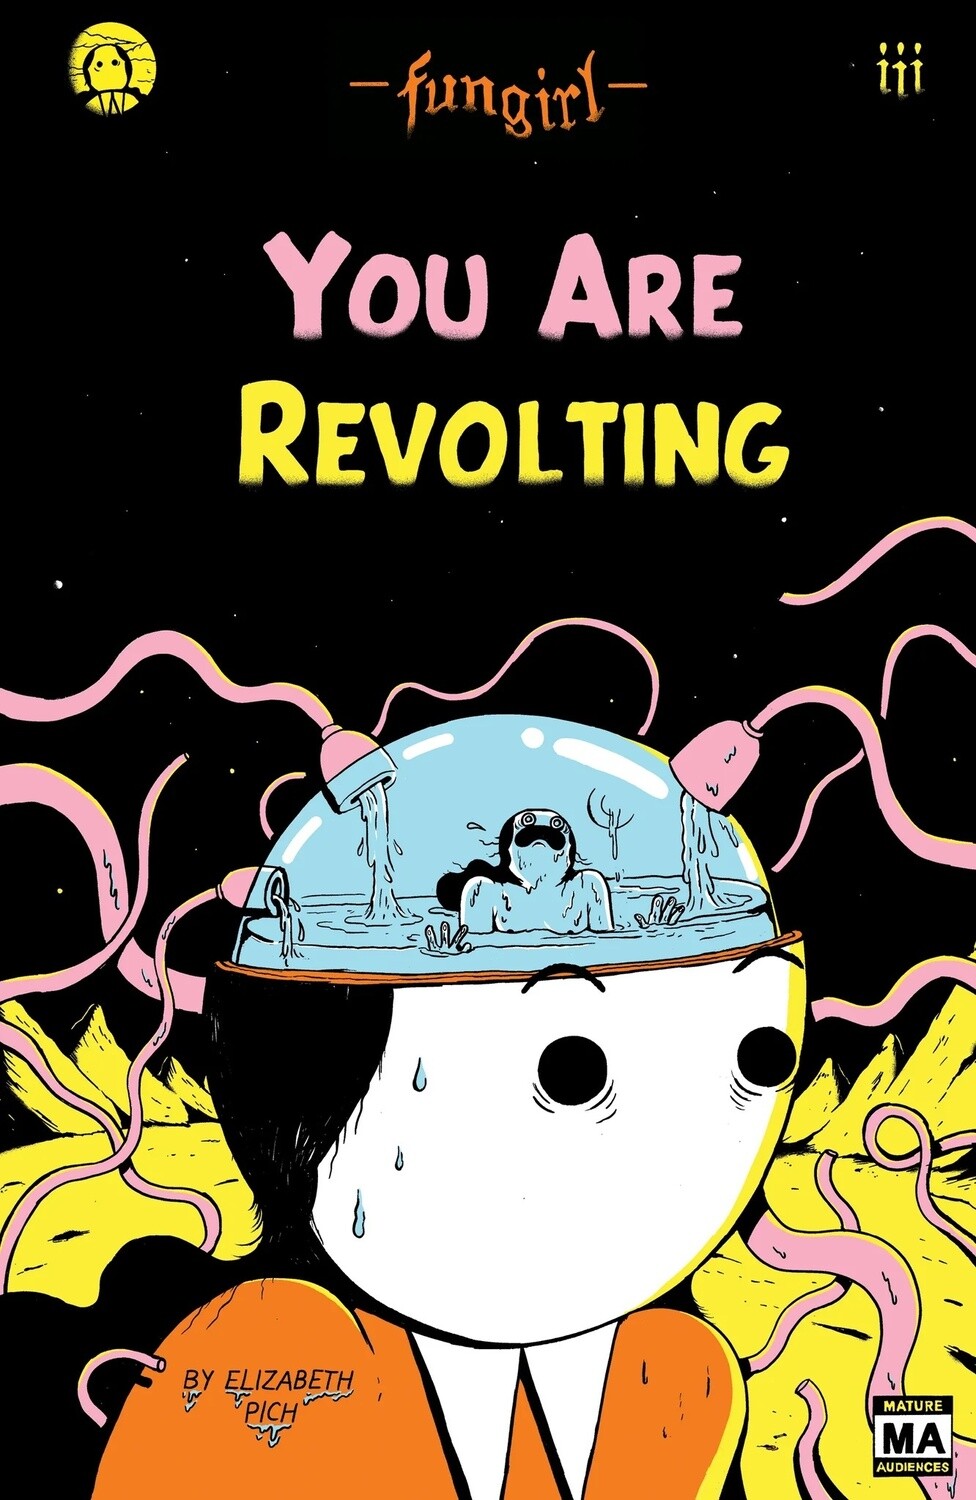 Fungirl: You Are Revolting, comic by Elizabeth Pich